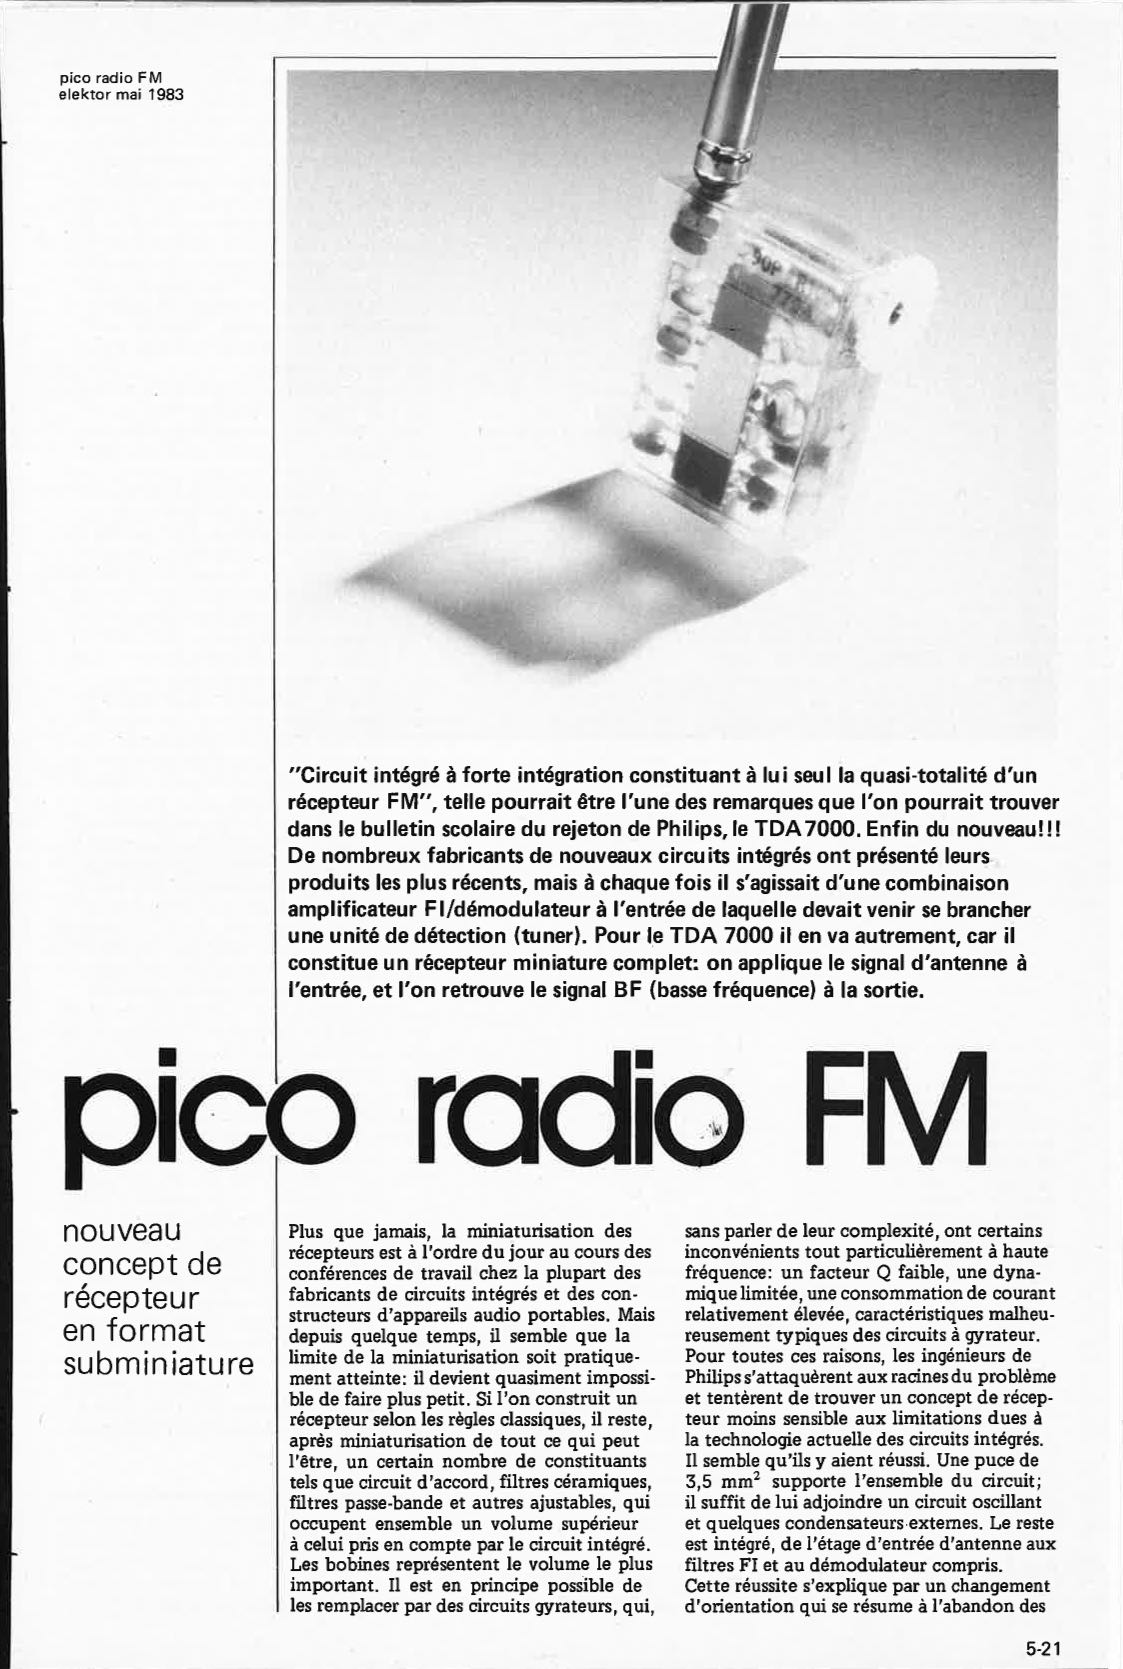 pico radio FM